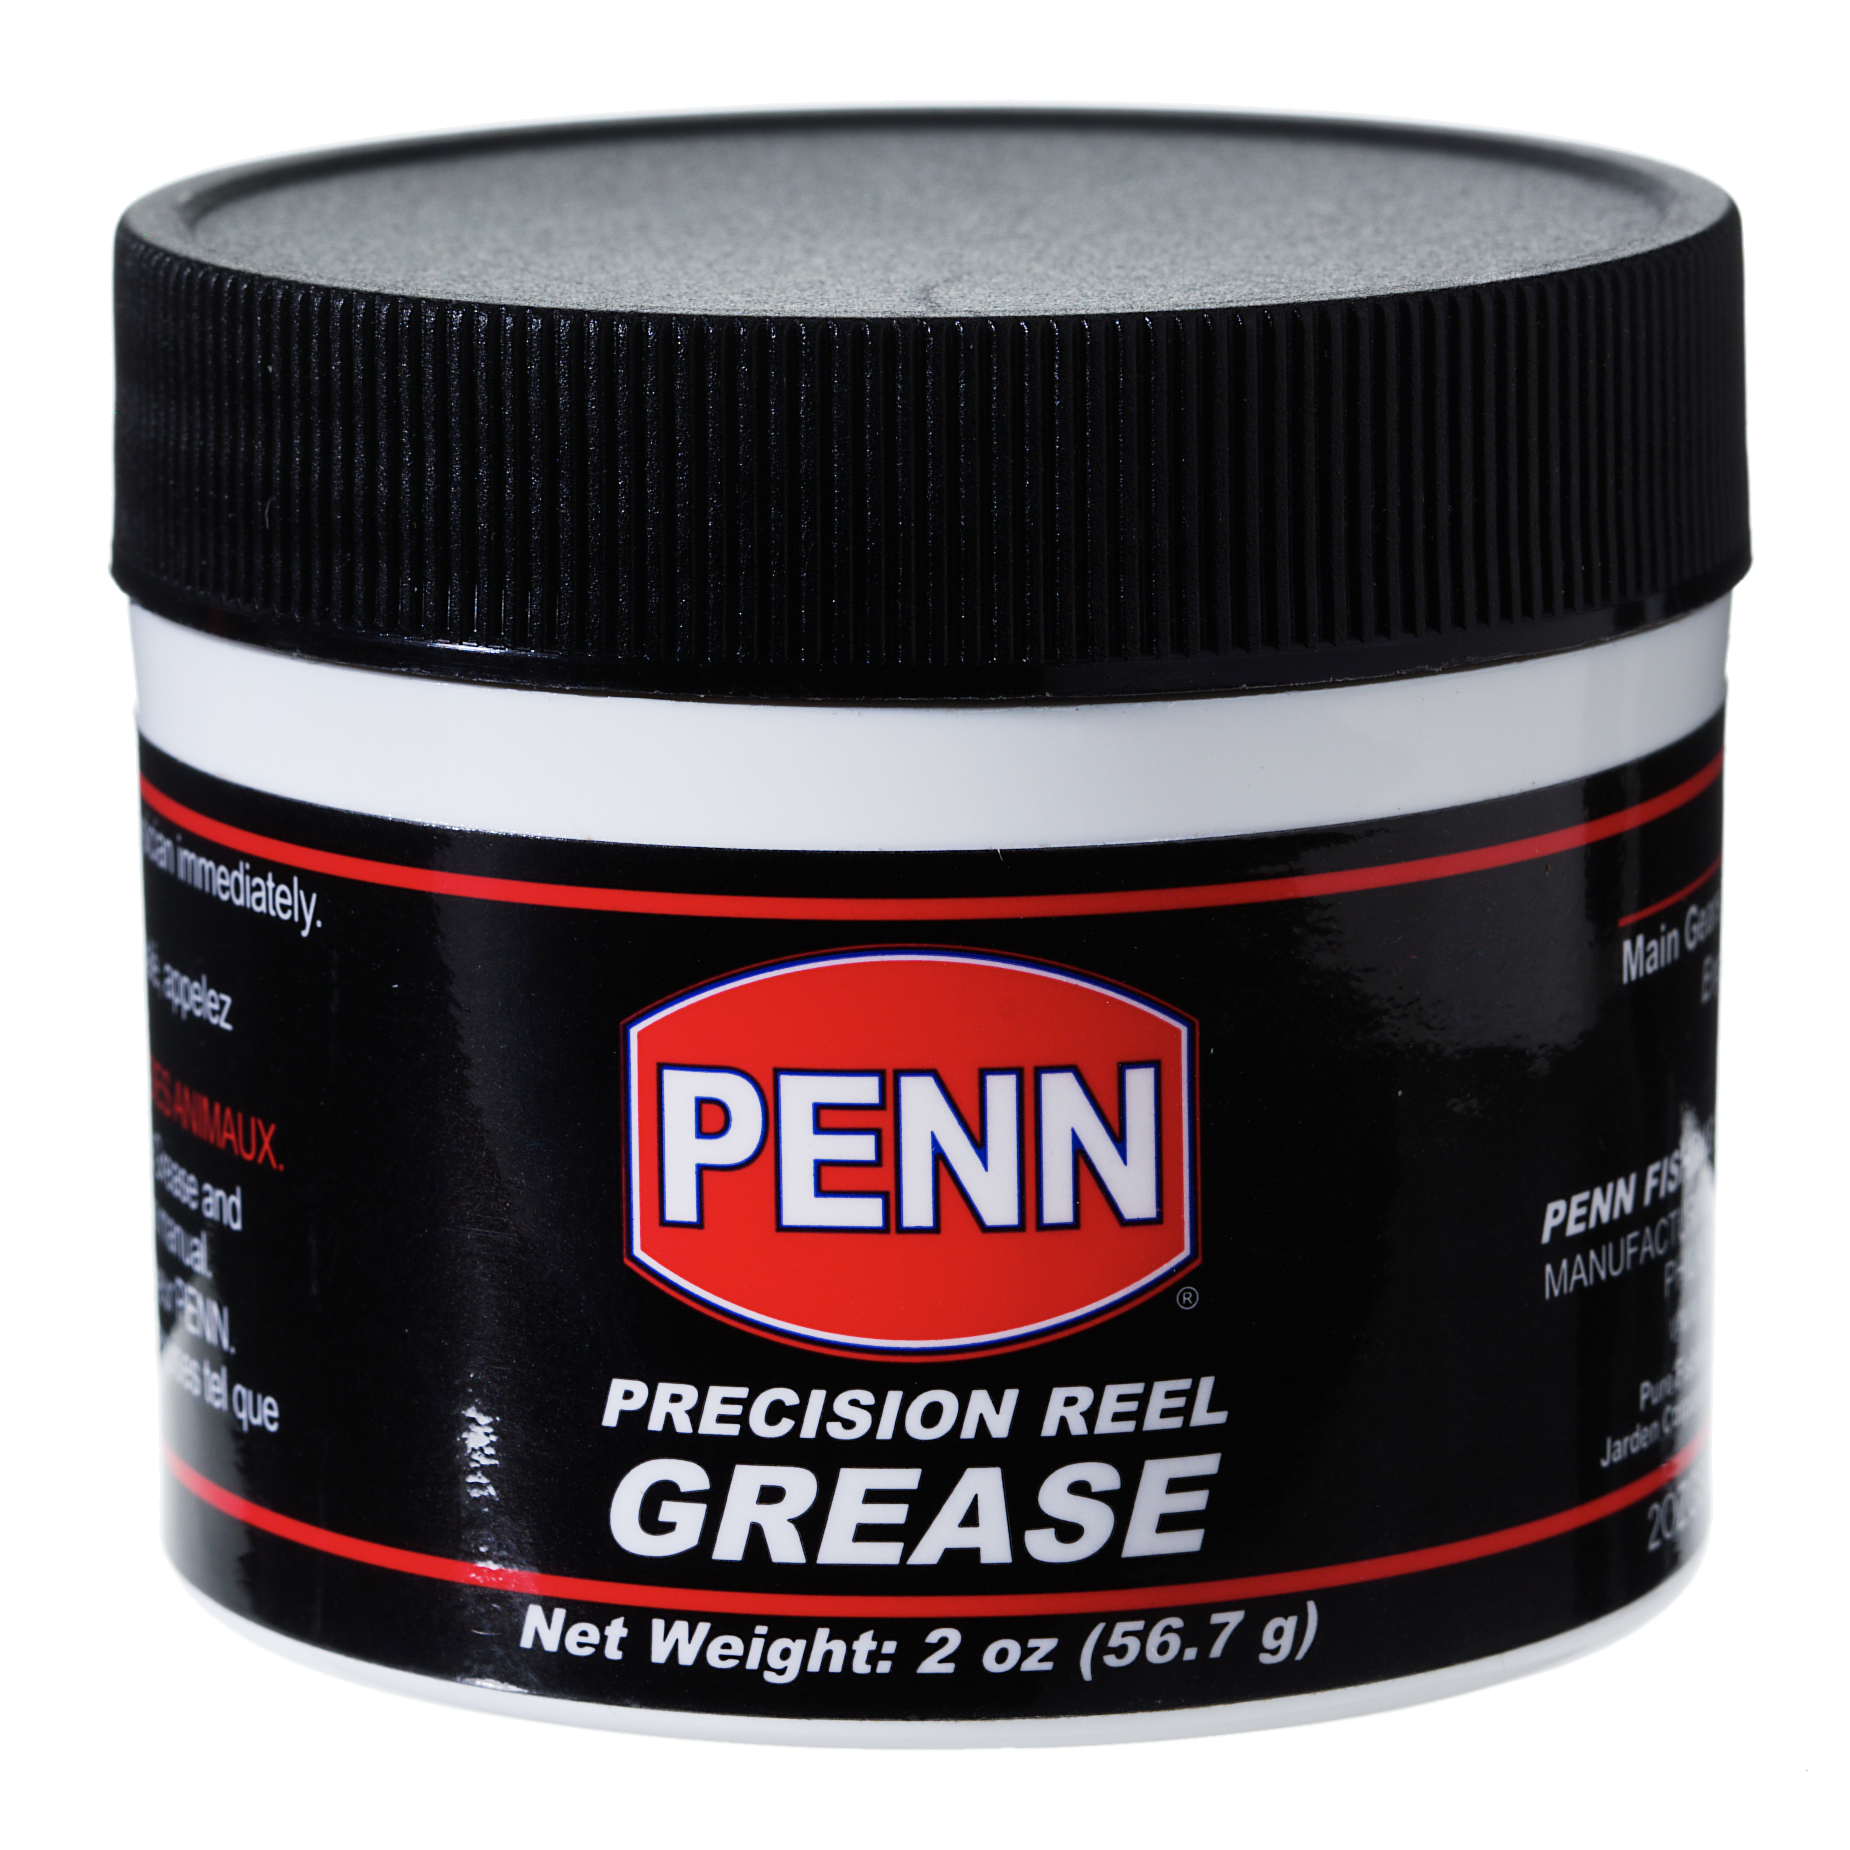 Penn - Grease - 1 Pound